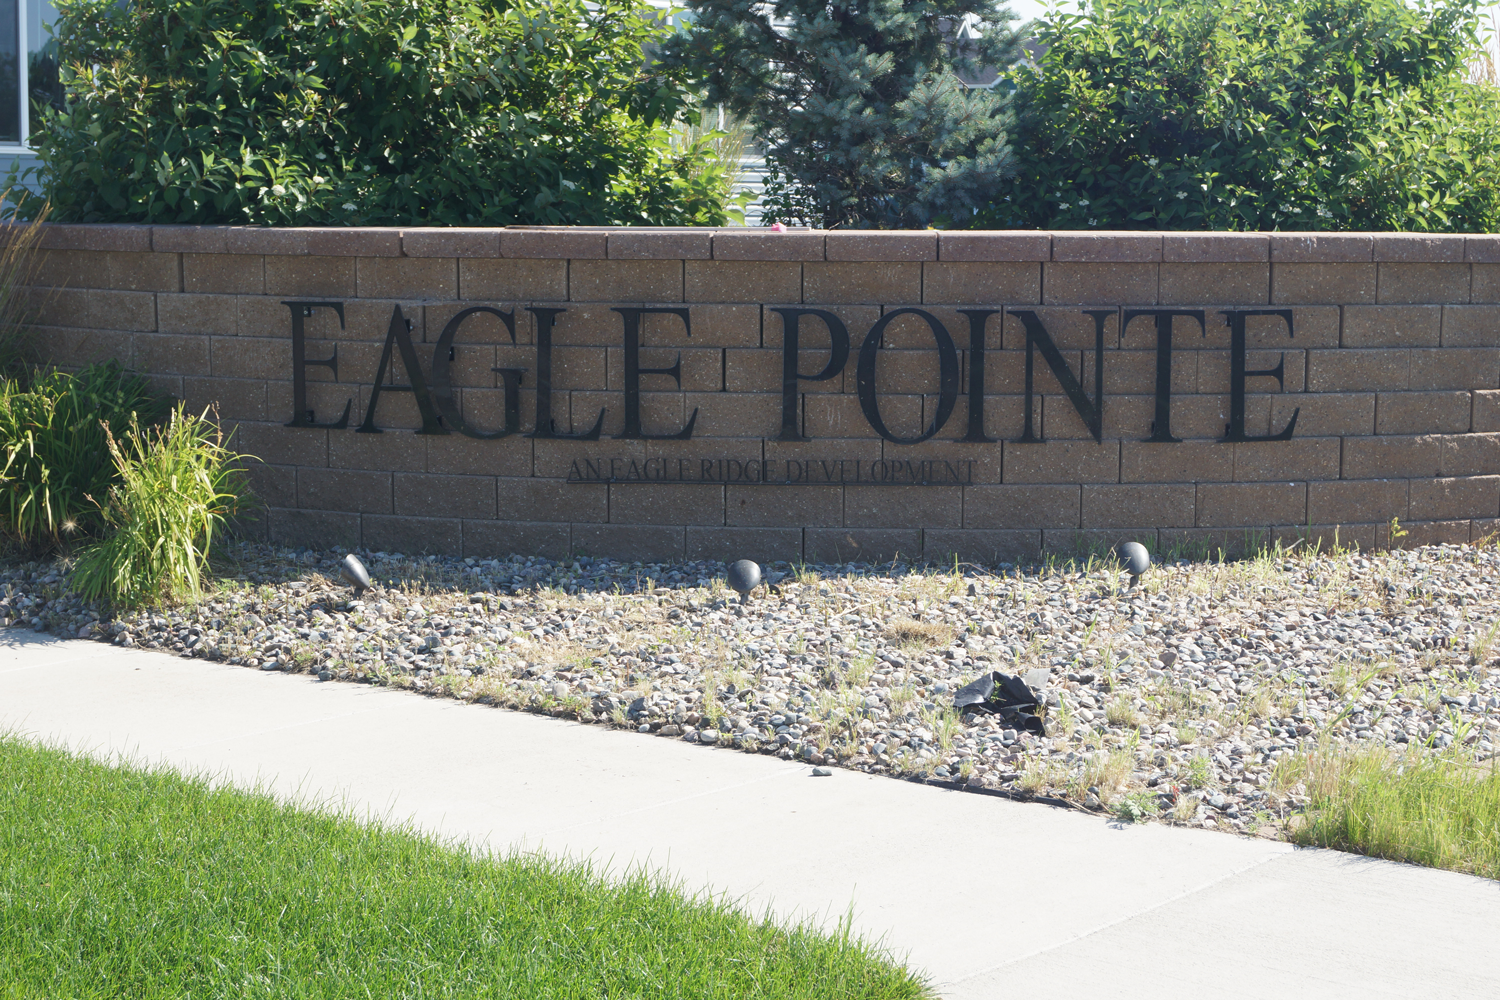 Eagle Pointe